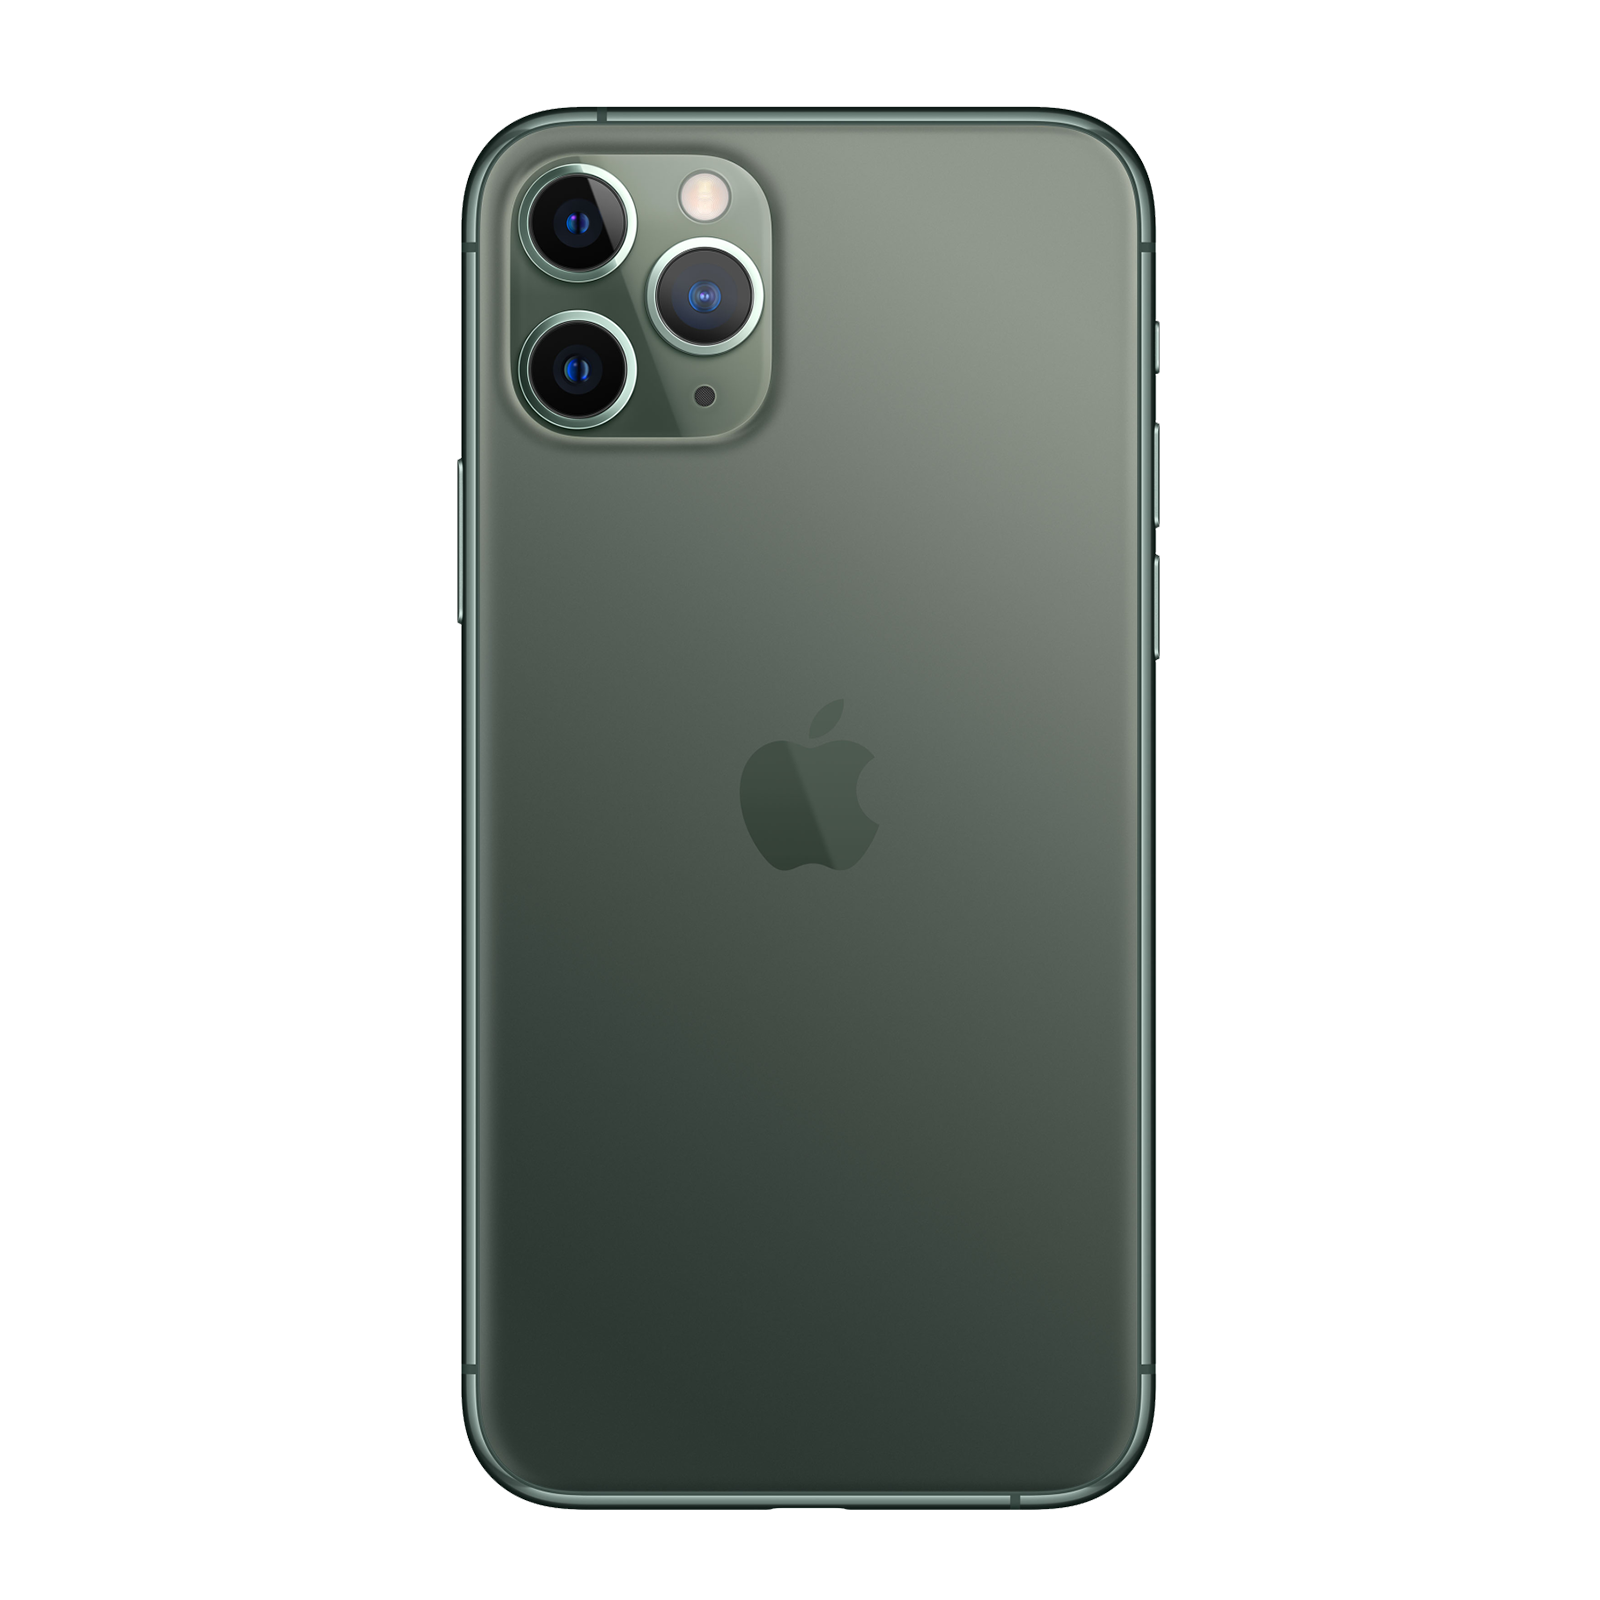 Apple iPhone 11 Pro Max 64GB Midnight Green Good - Sprint